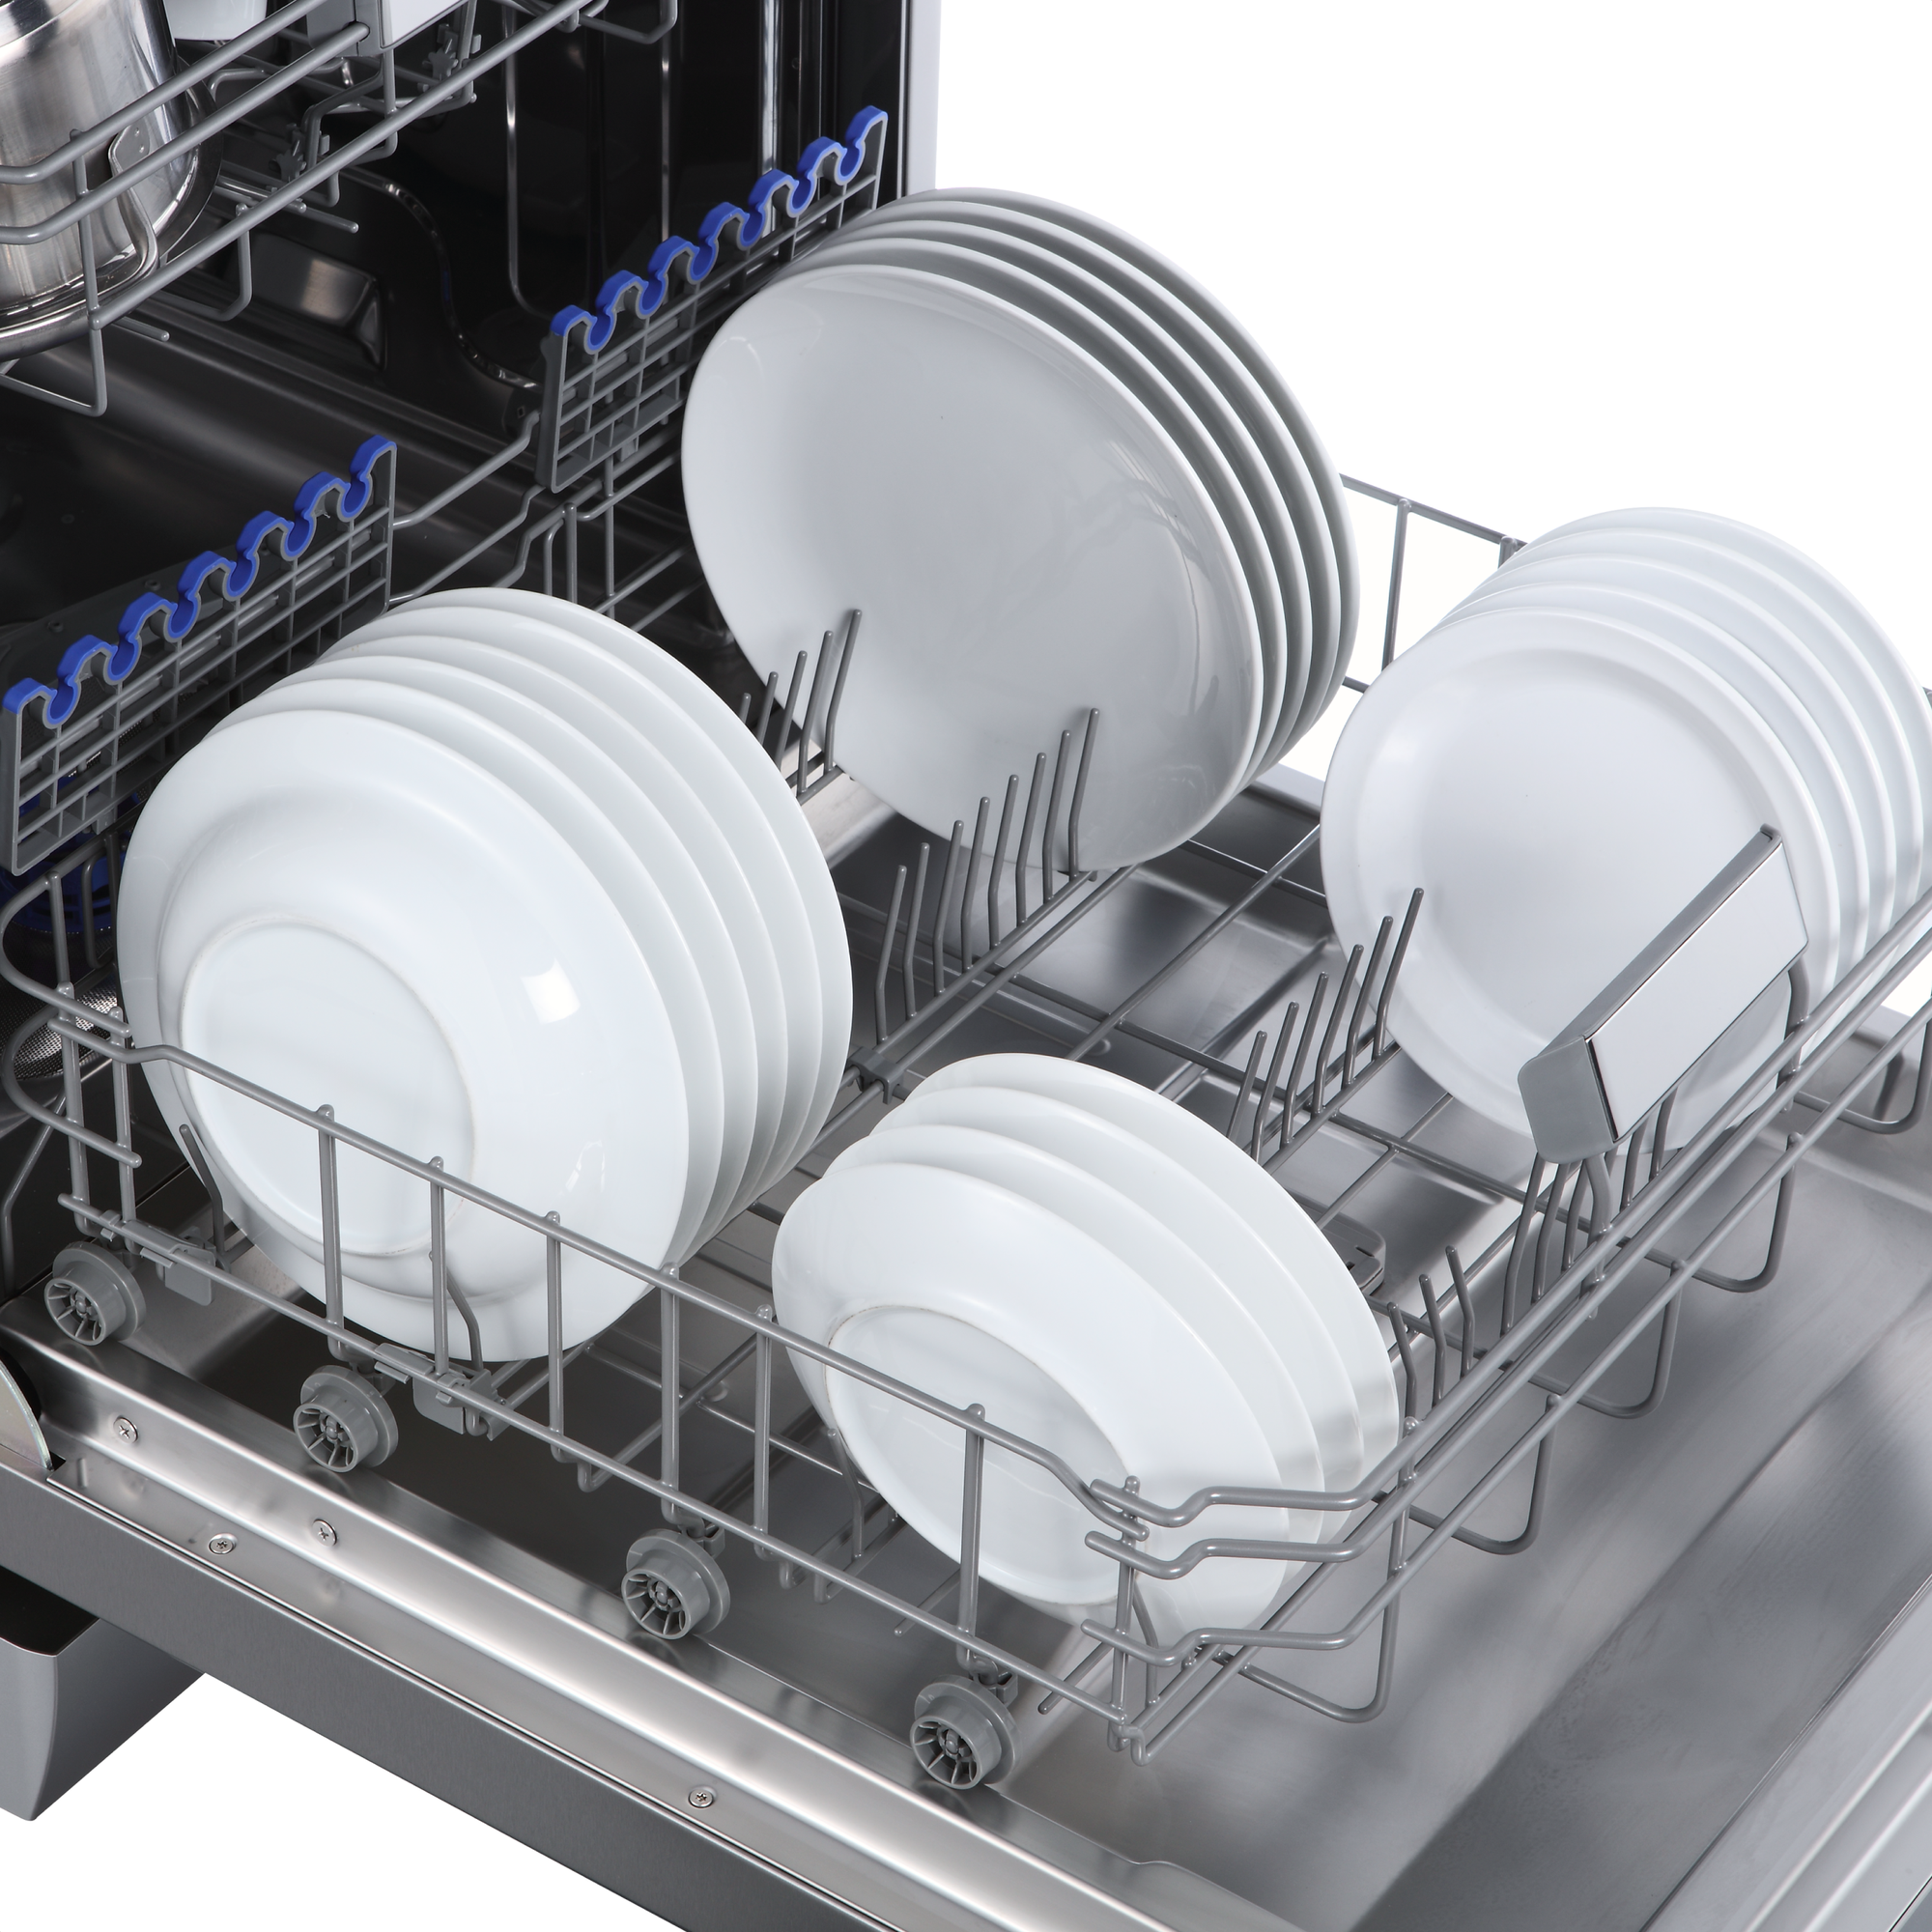 Посудомоечная машина Tuvio DF63PT8